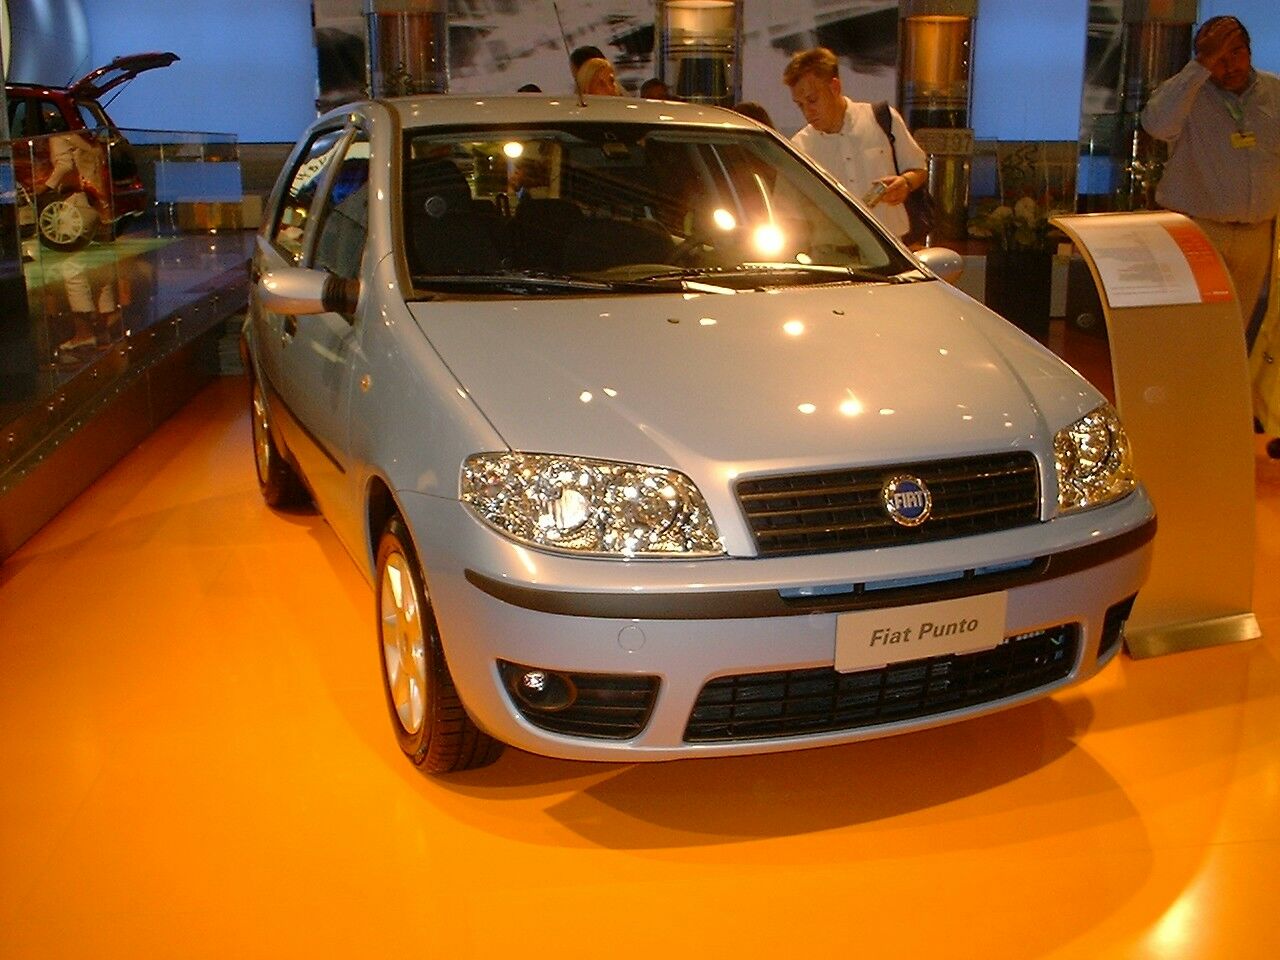 Fiat Punto at the 2003 Frankfurt IAA